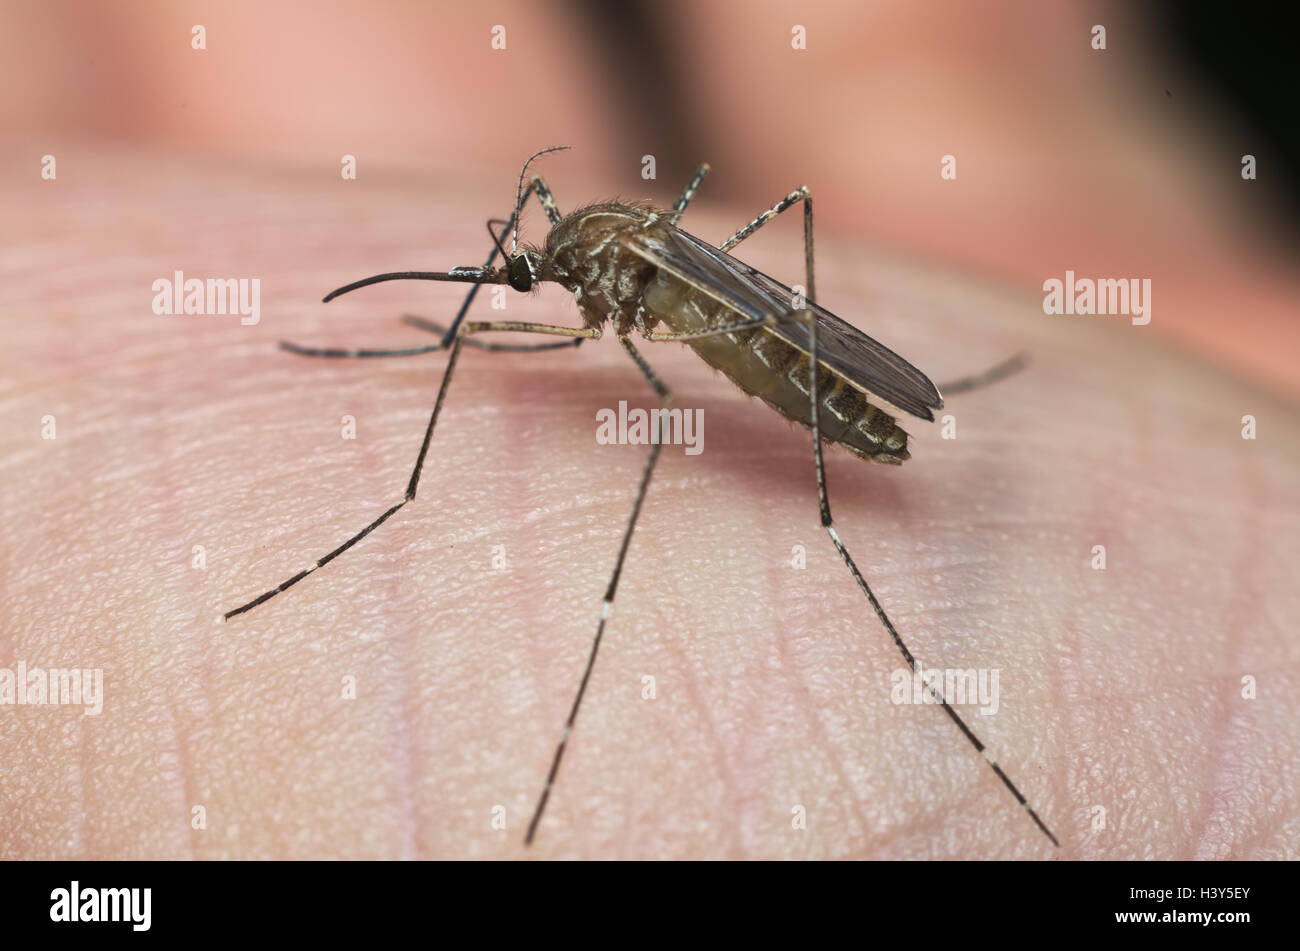 Common house mosquito (Culex pipiens) preparing for bite human skin Stock Photo